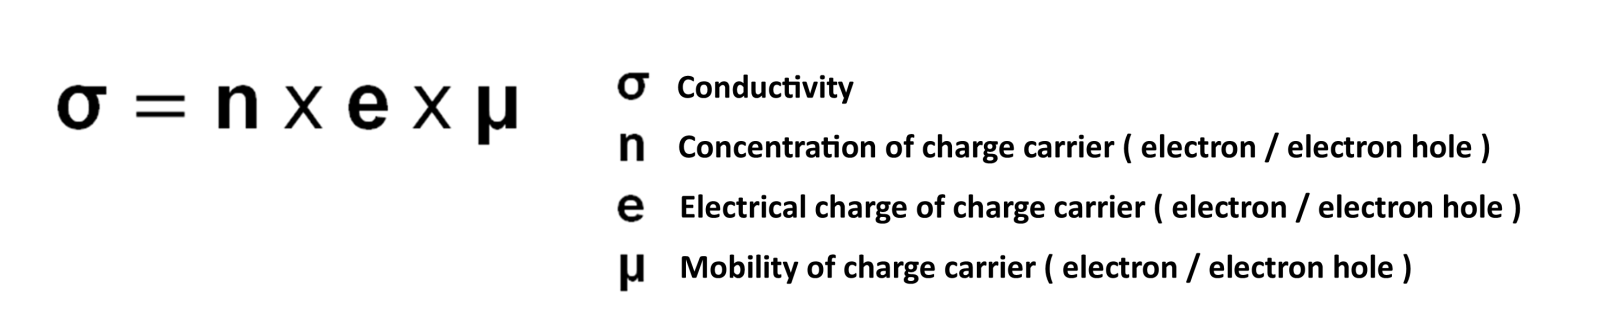 ITO-conductivity